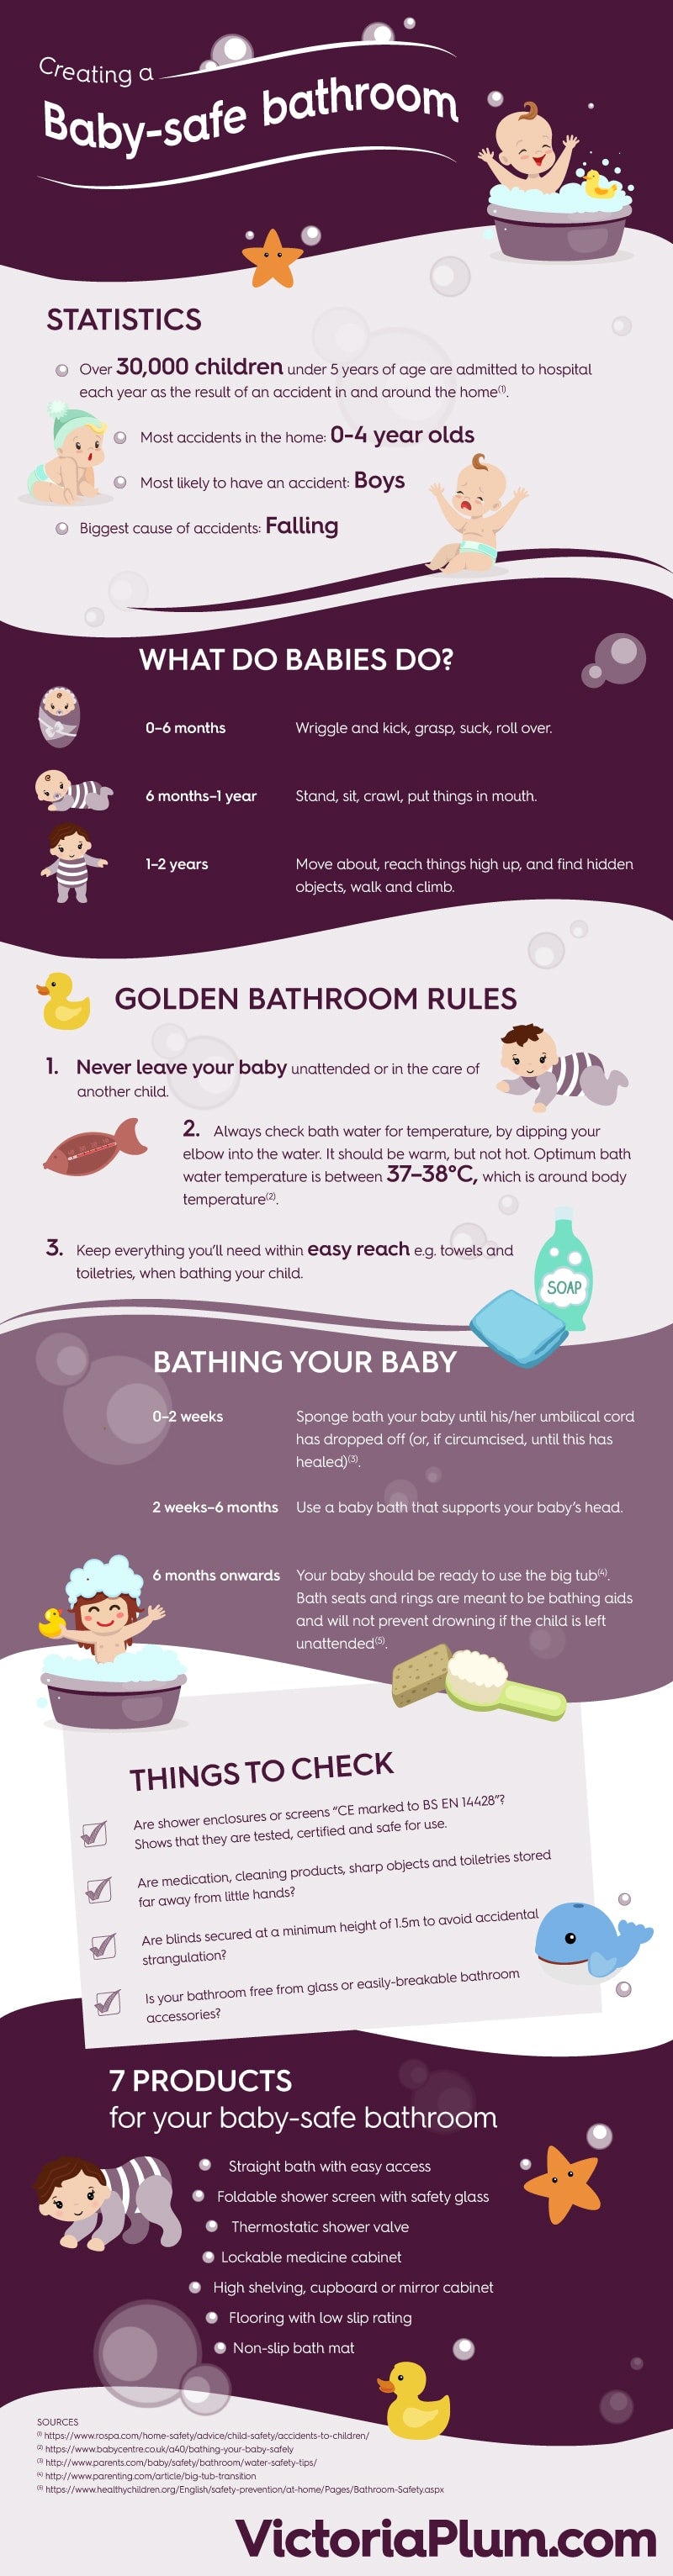 Creating a baby-safe bathroom